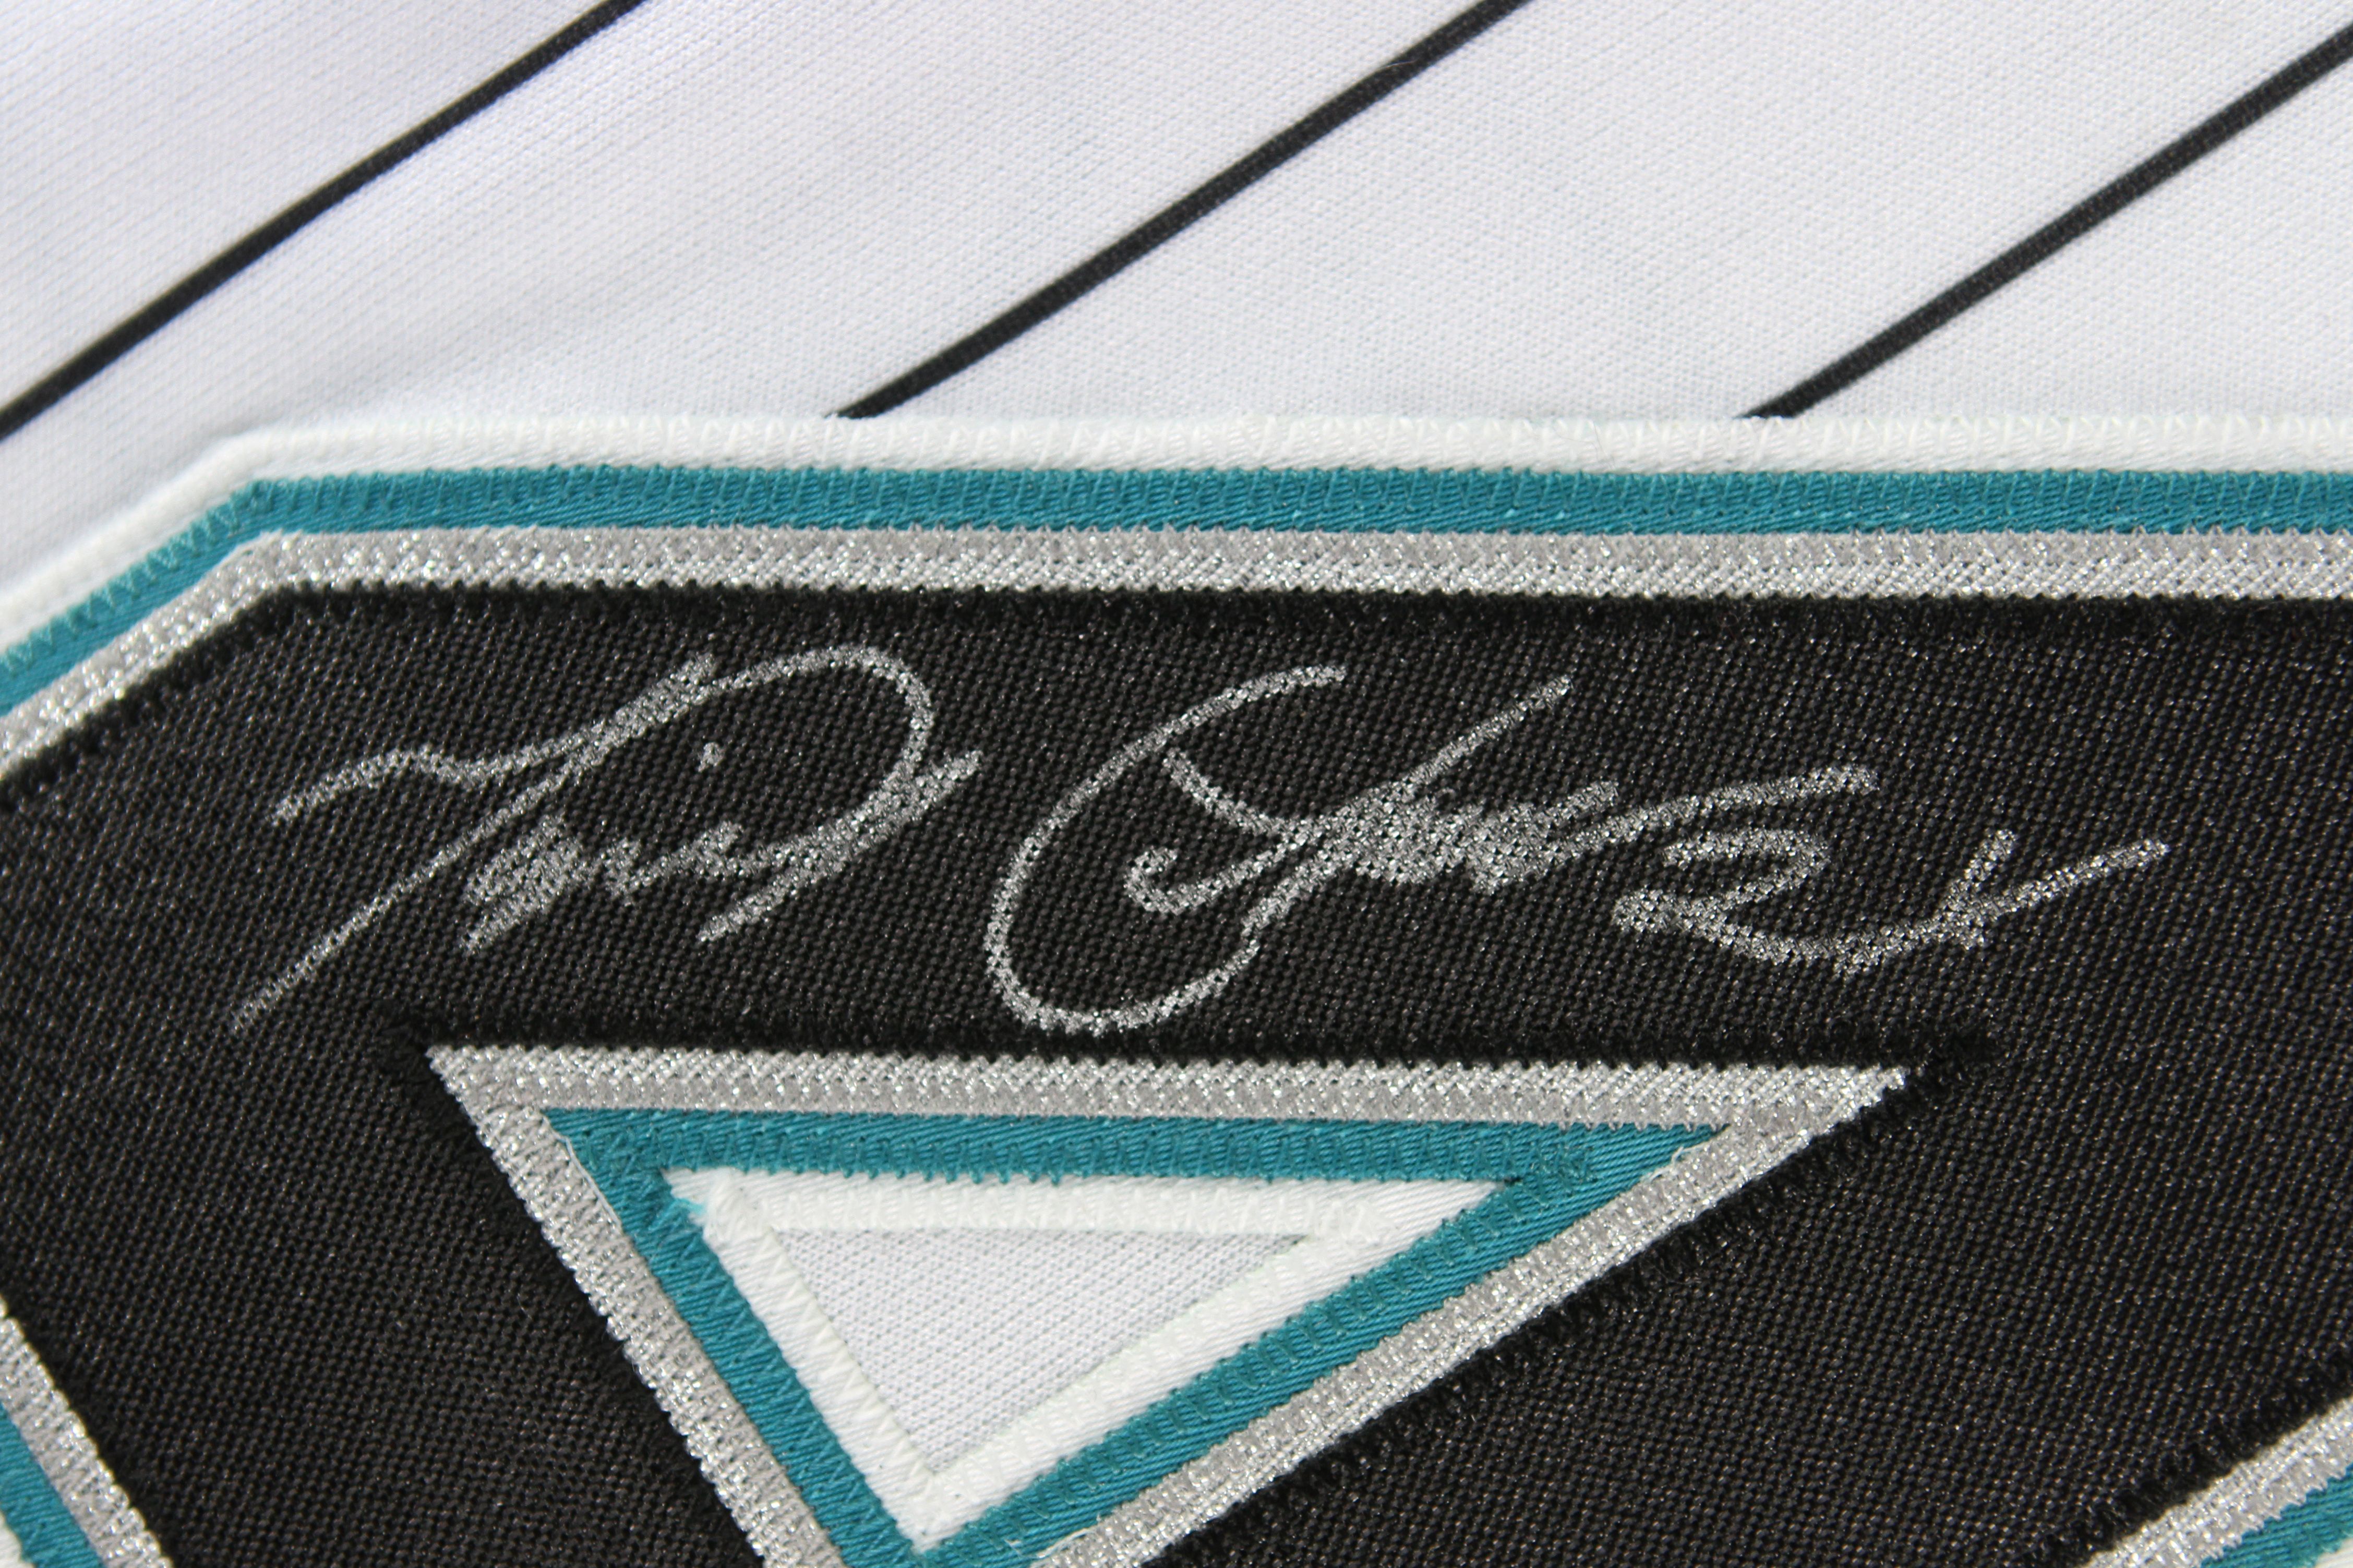  Miguel Cabrera Autographed Florida Marlins Jersey - Autographed  MLB Jerseys : פריטי אספנות ואמנות